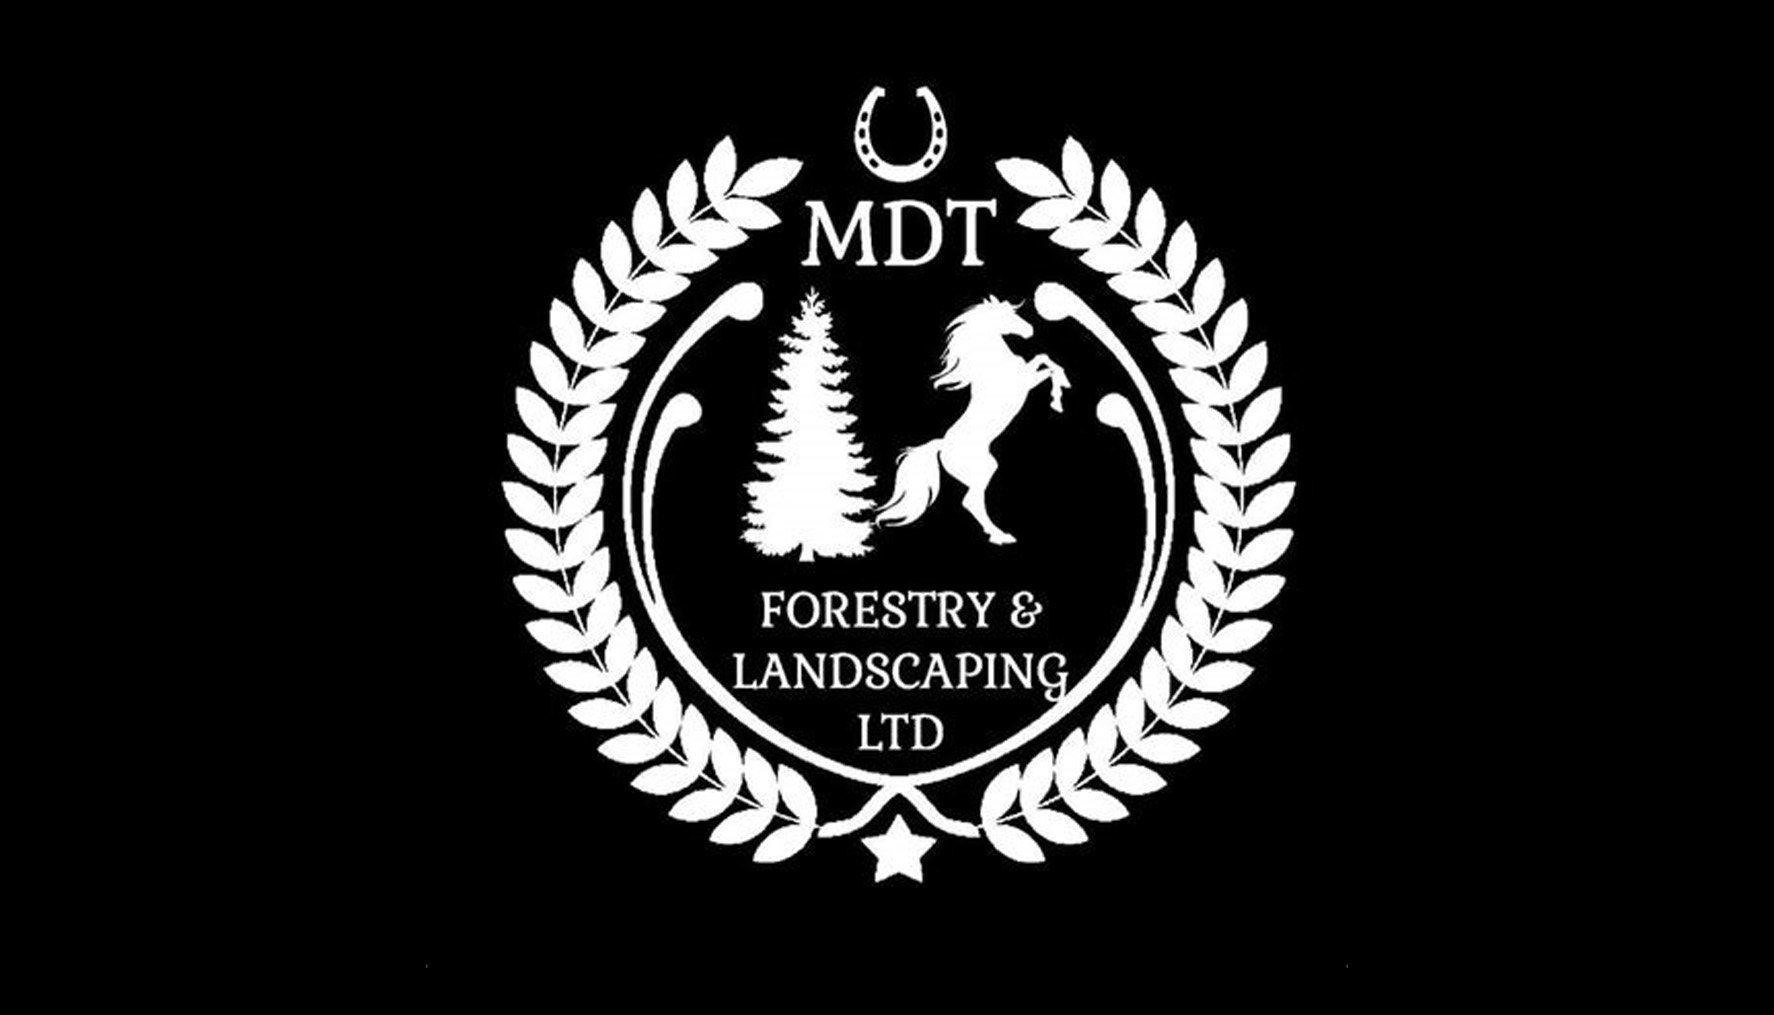 MDT Forestry & Landscaping Ltd